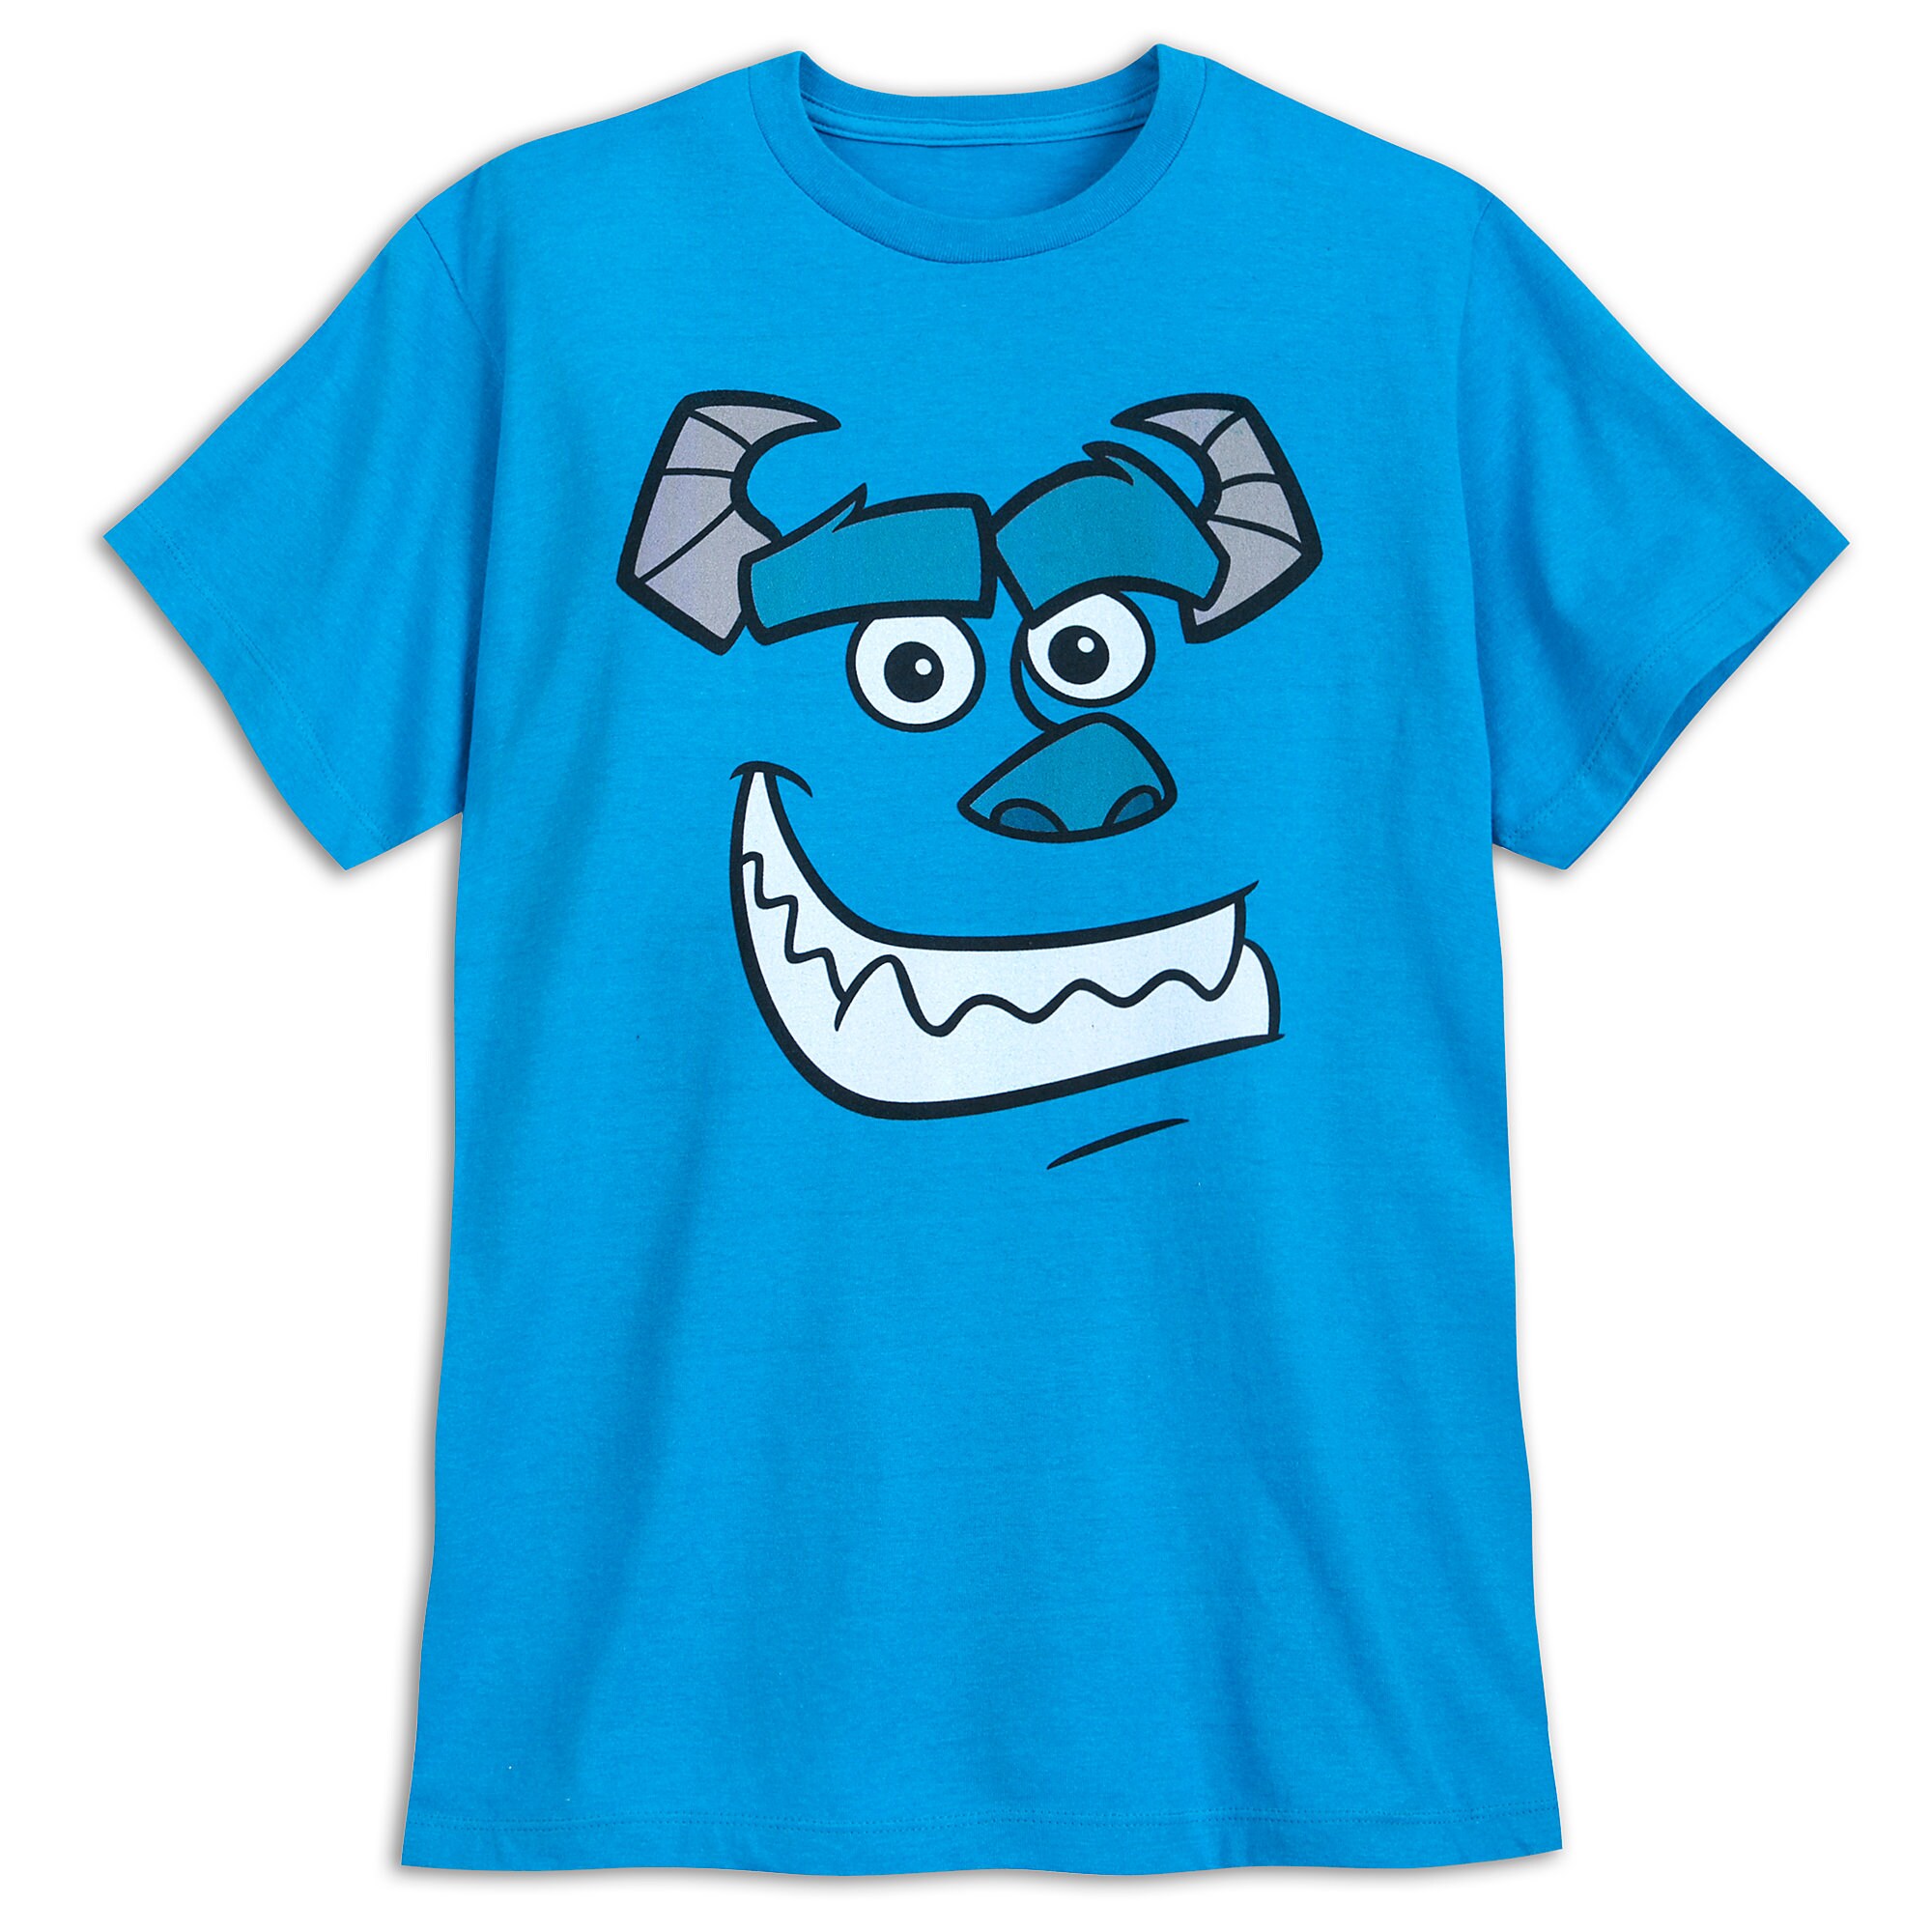 Sulley T-Shirt for Men - Monsters, Inc.